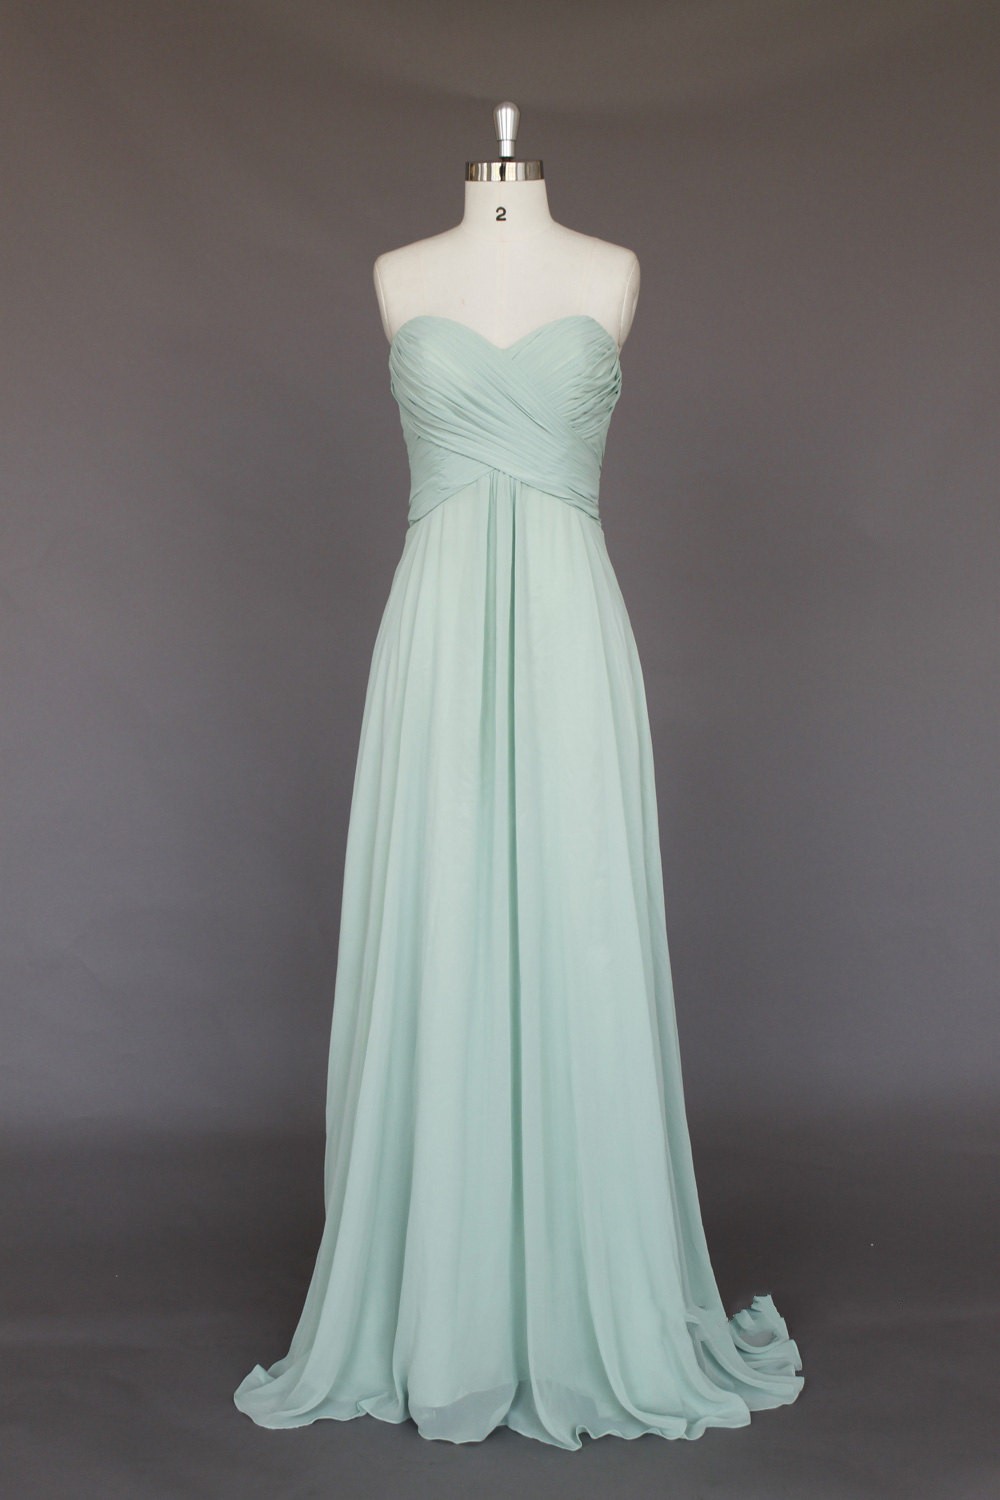 Empire Chiffon Bridesmaid Dress,a-line Sweetheart Prom Dress, Party Dress,formal Evening Dress